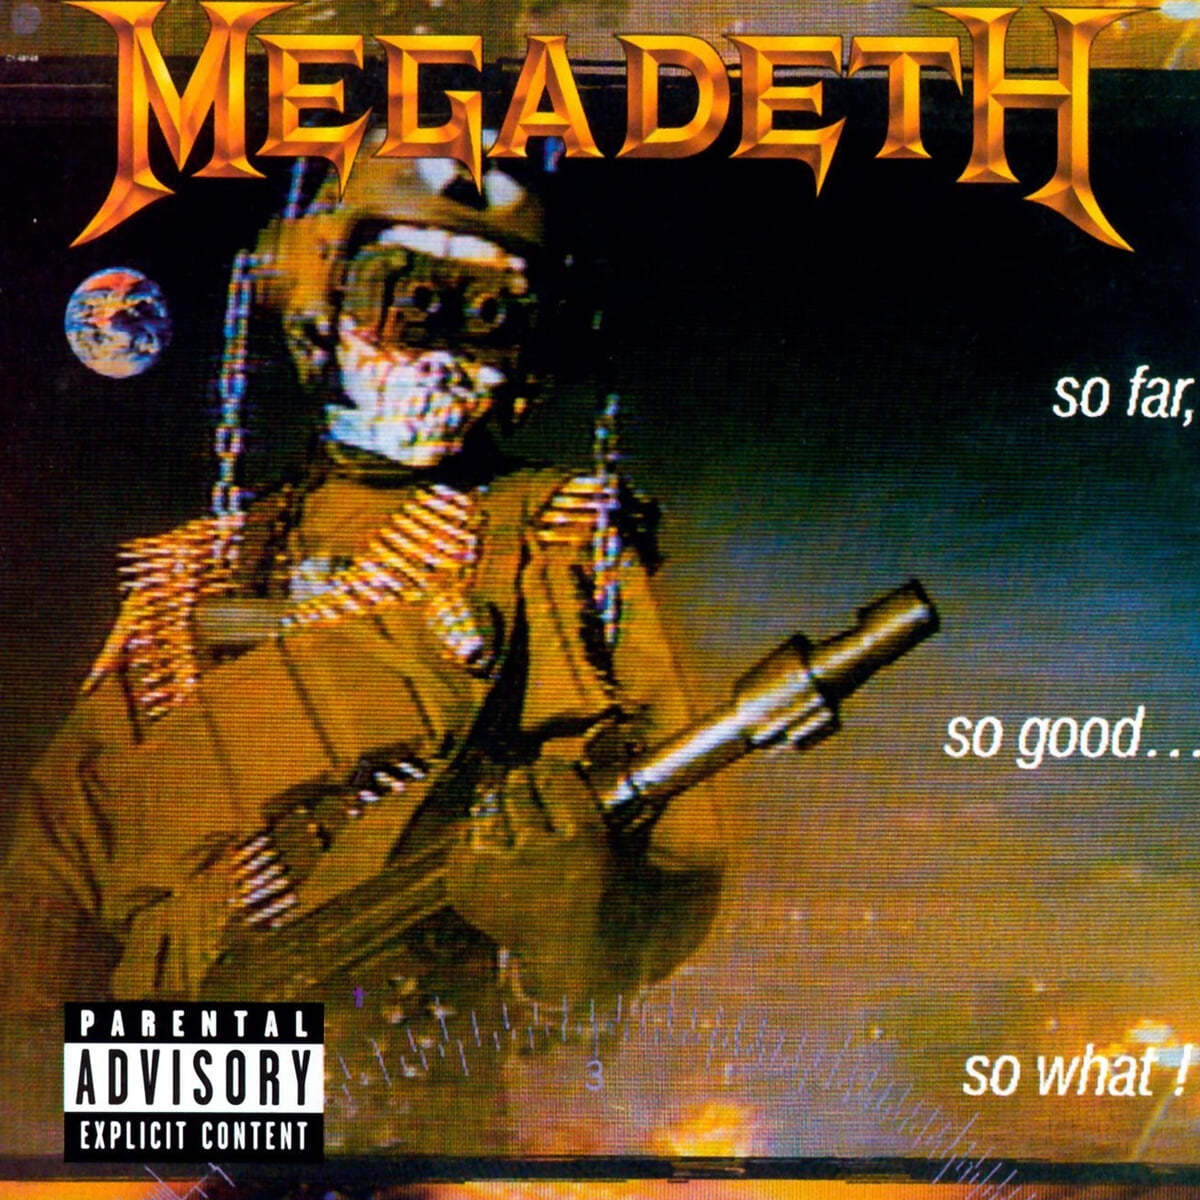 Megadeth (메가데스) - So Far, So Good, So What